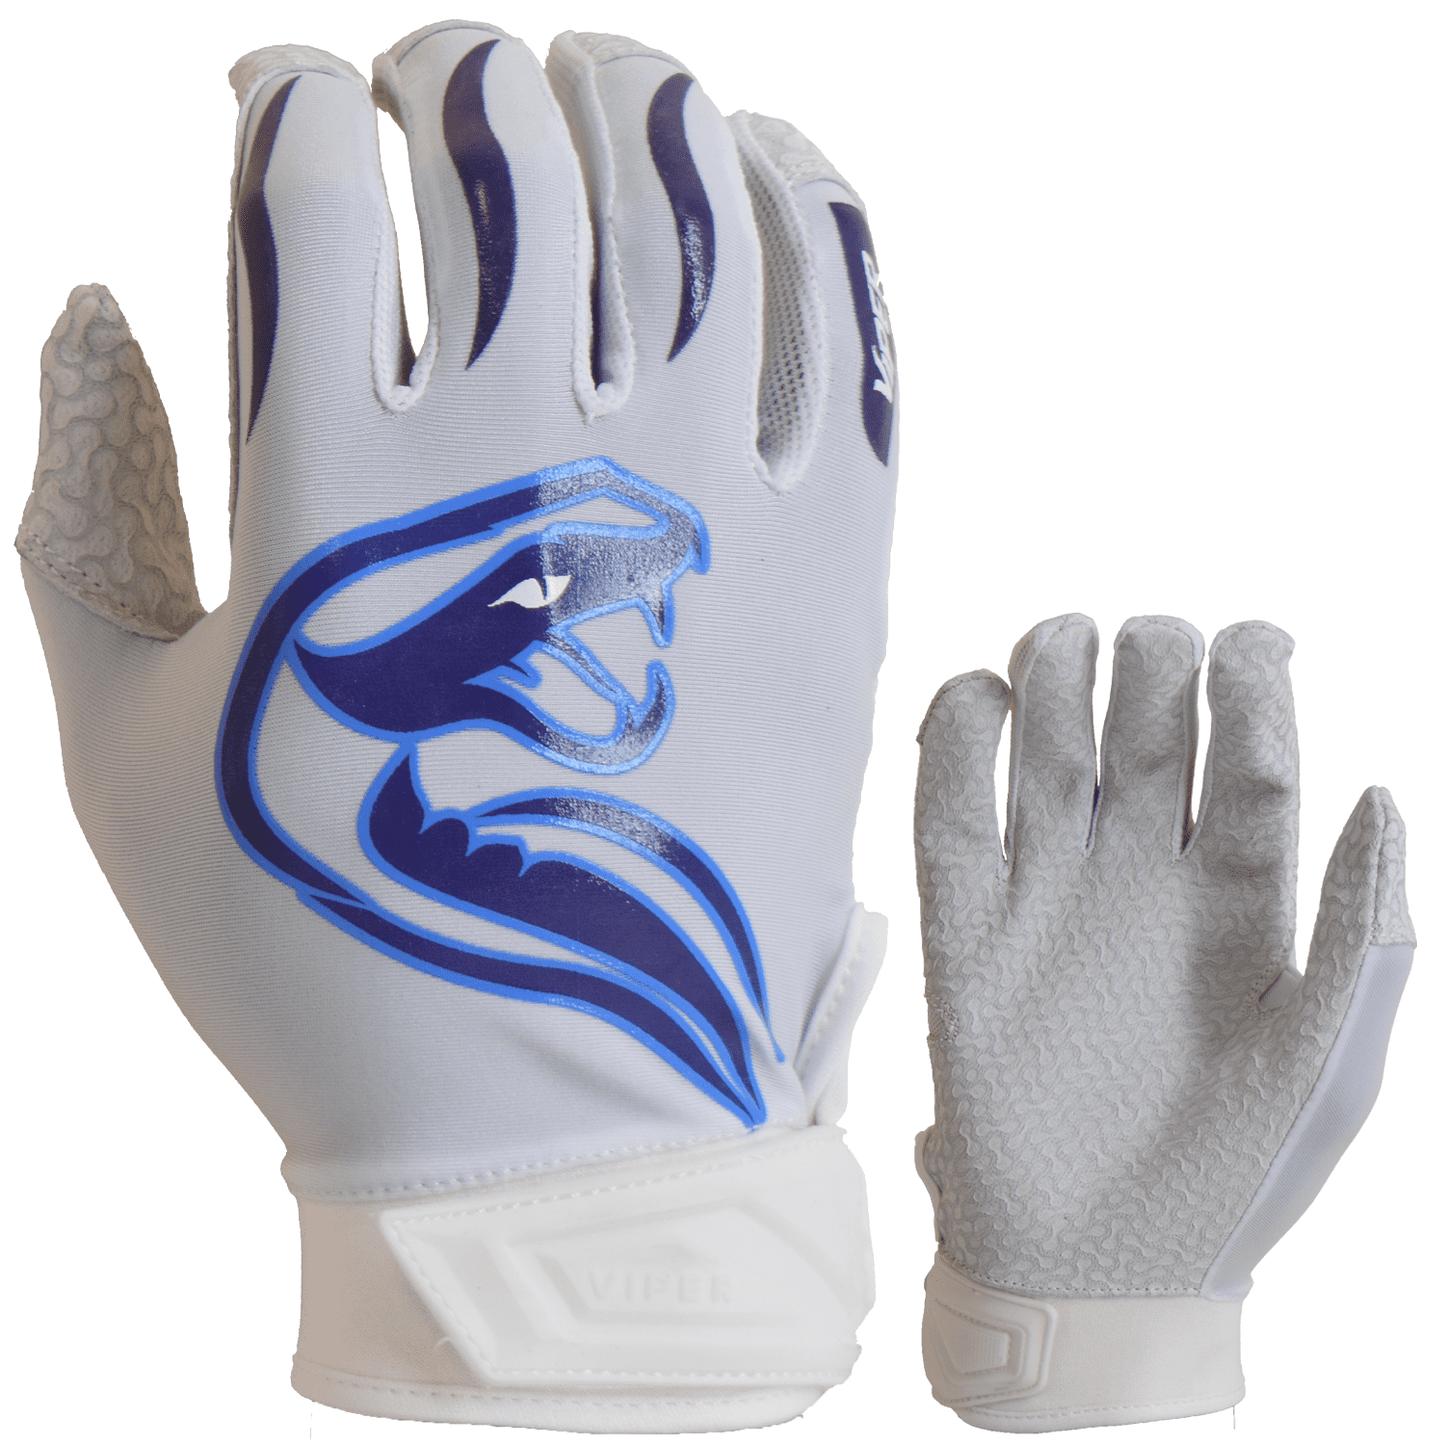 Viper Lite Premium Batting Gloves Leather Palm - Team Edition - White/Carolina/Purple